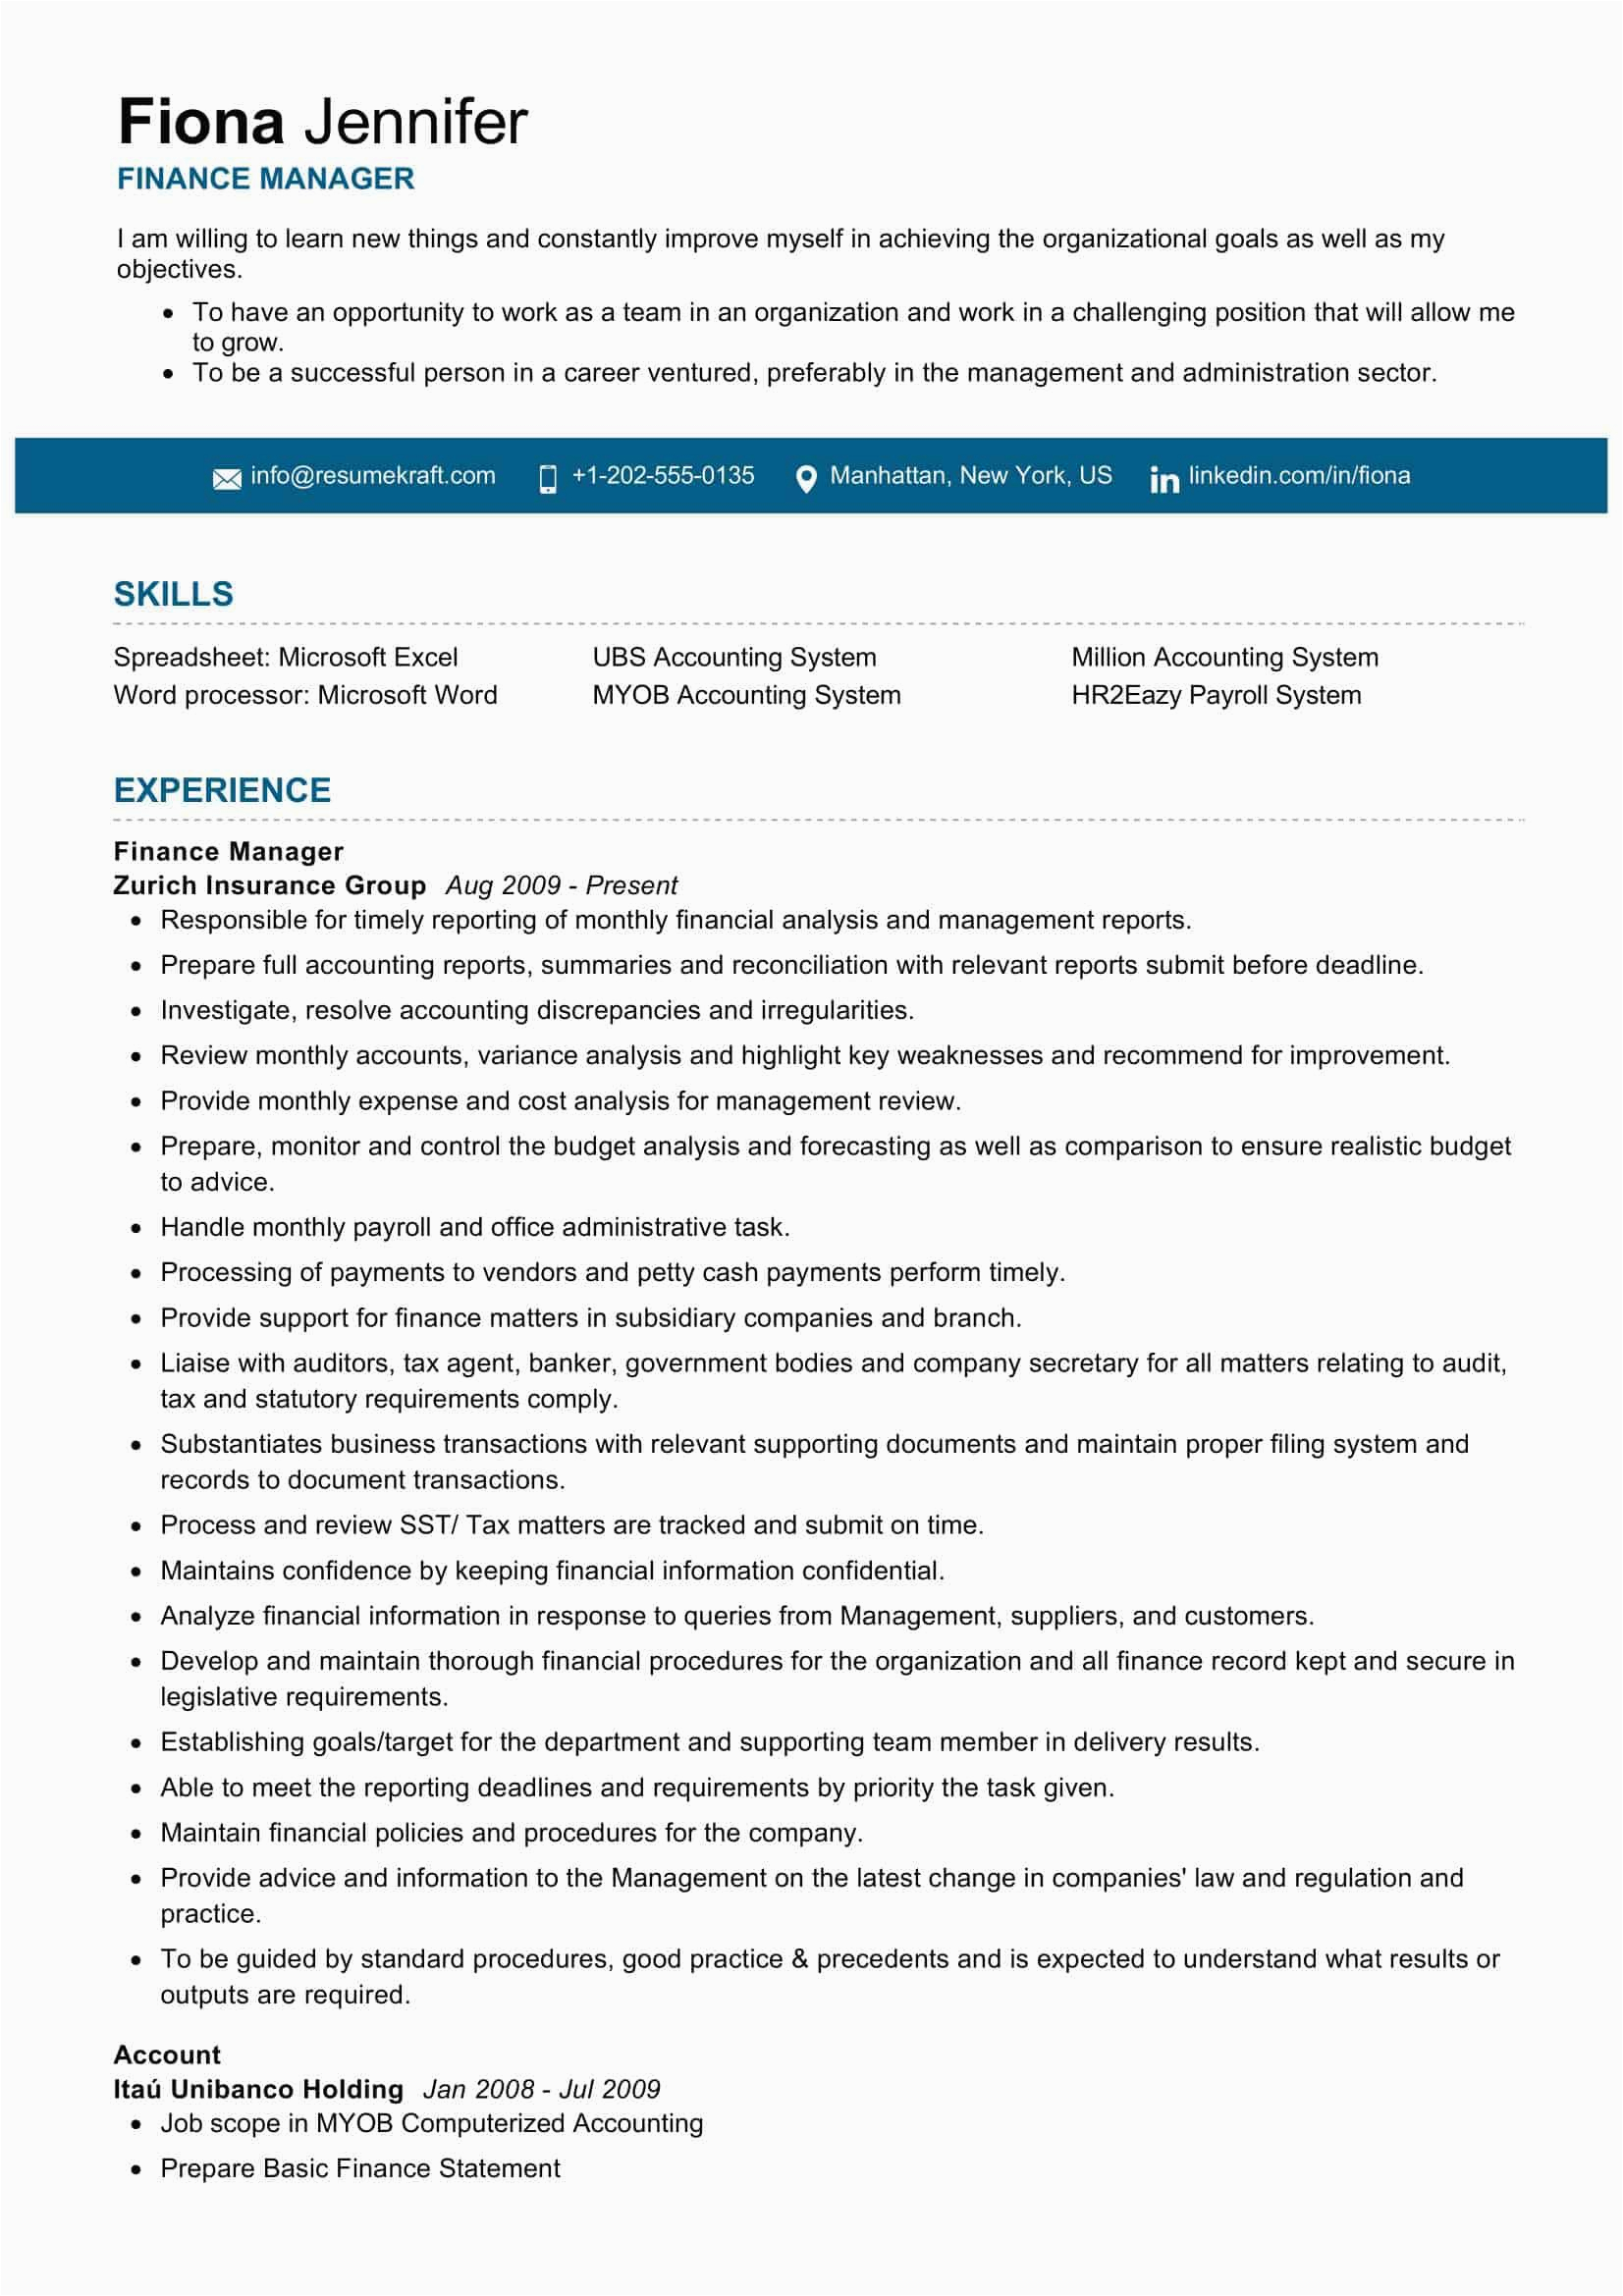 Free Sample Resume for Finance Manager Finance Manager Resume Sample 2021